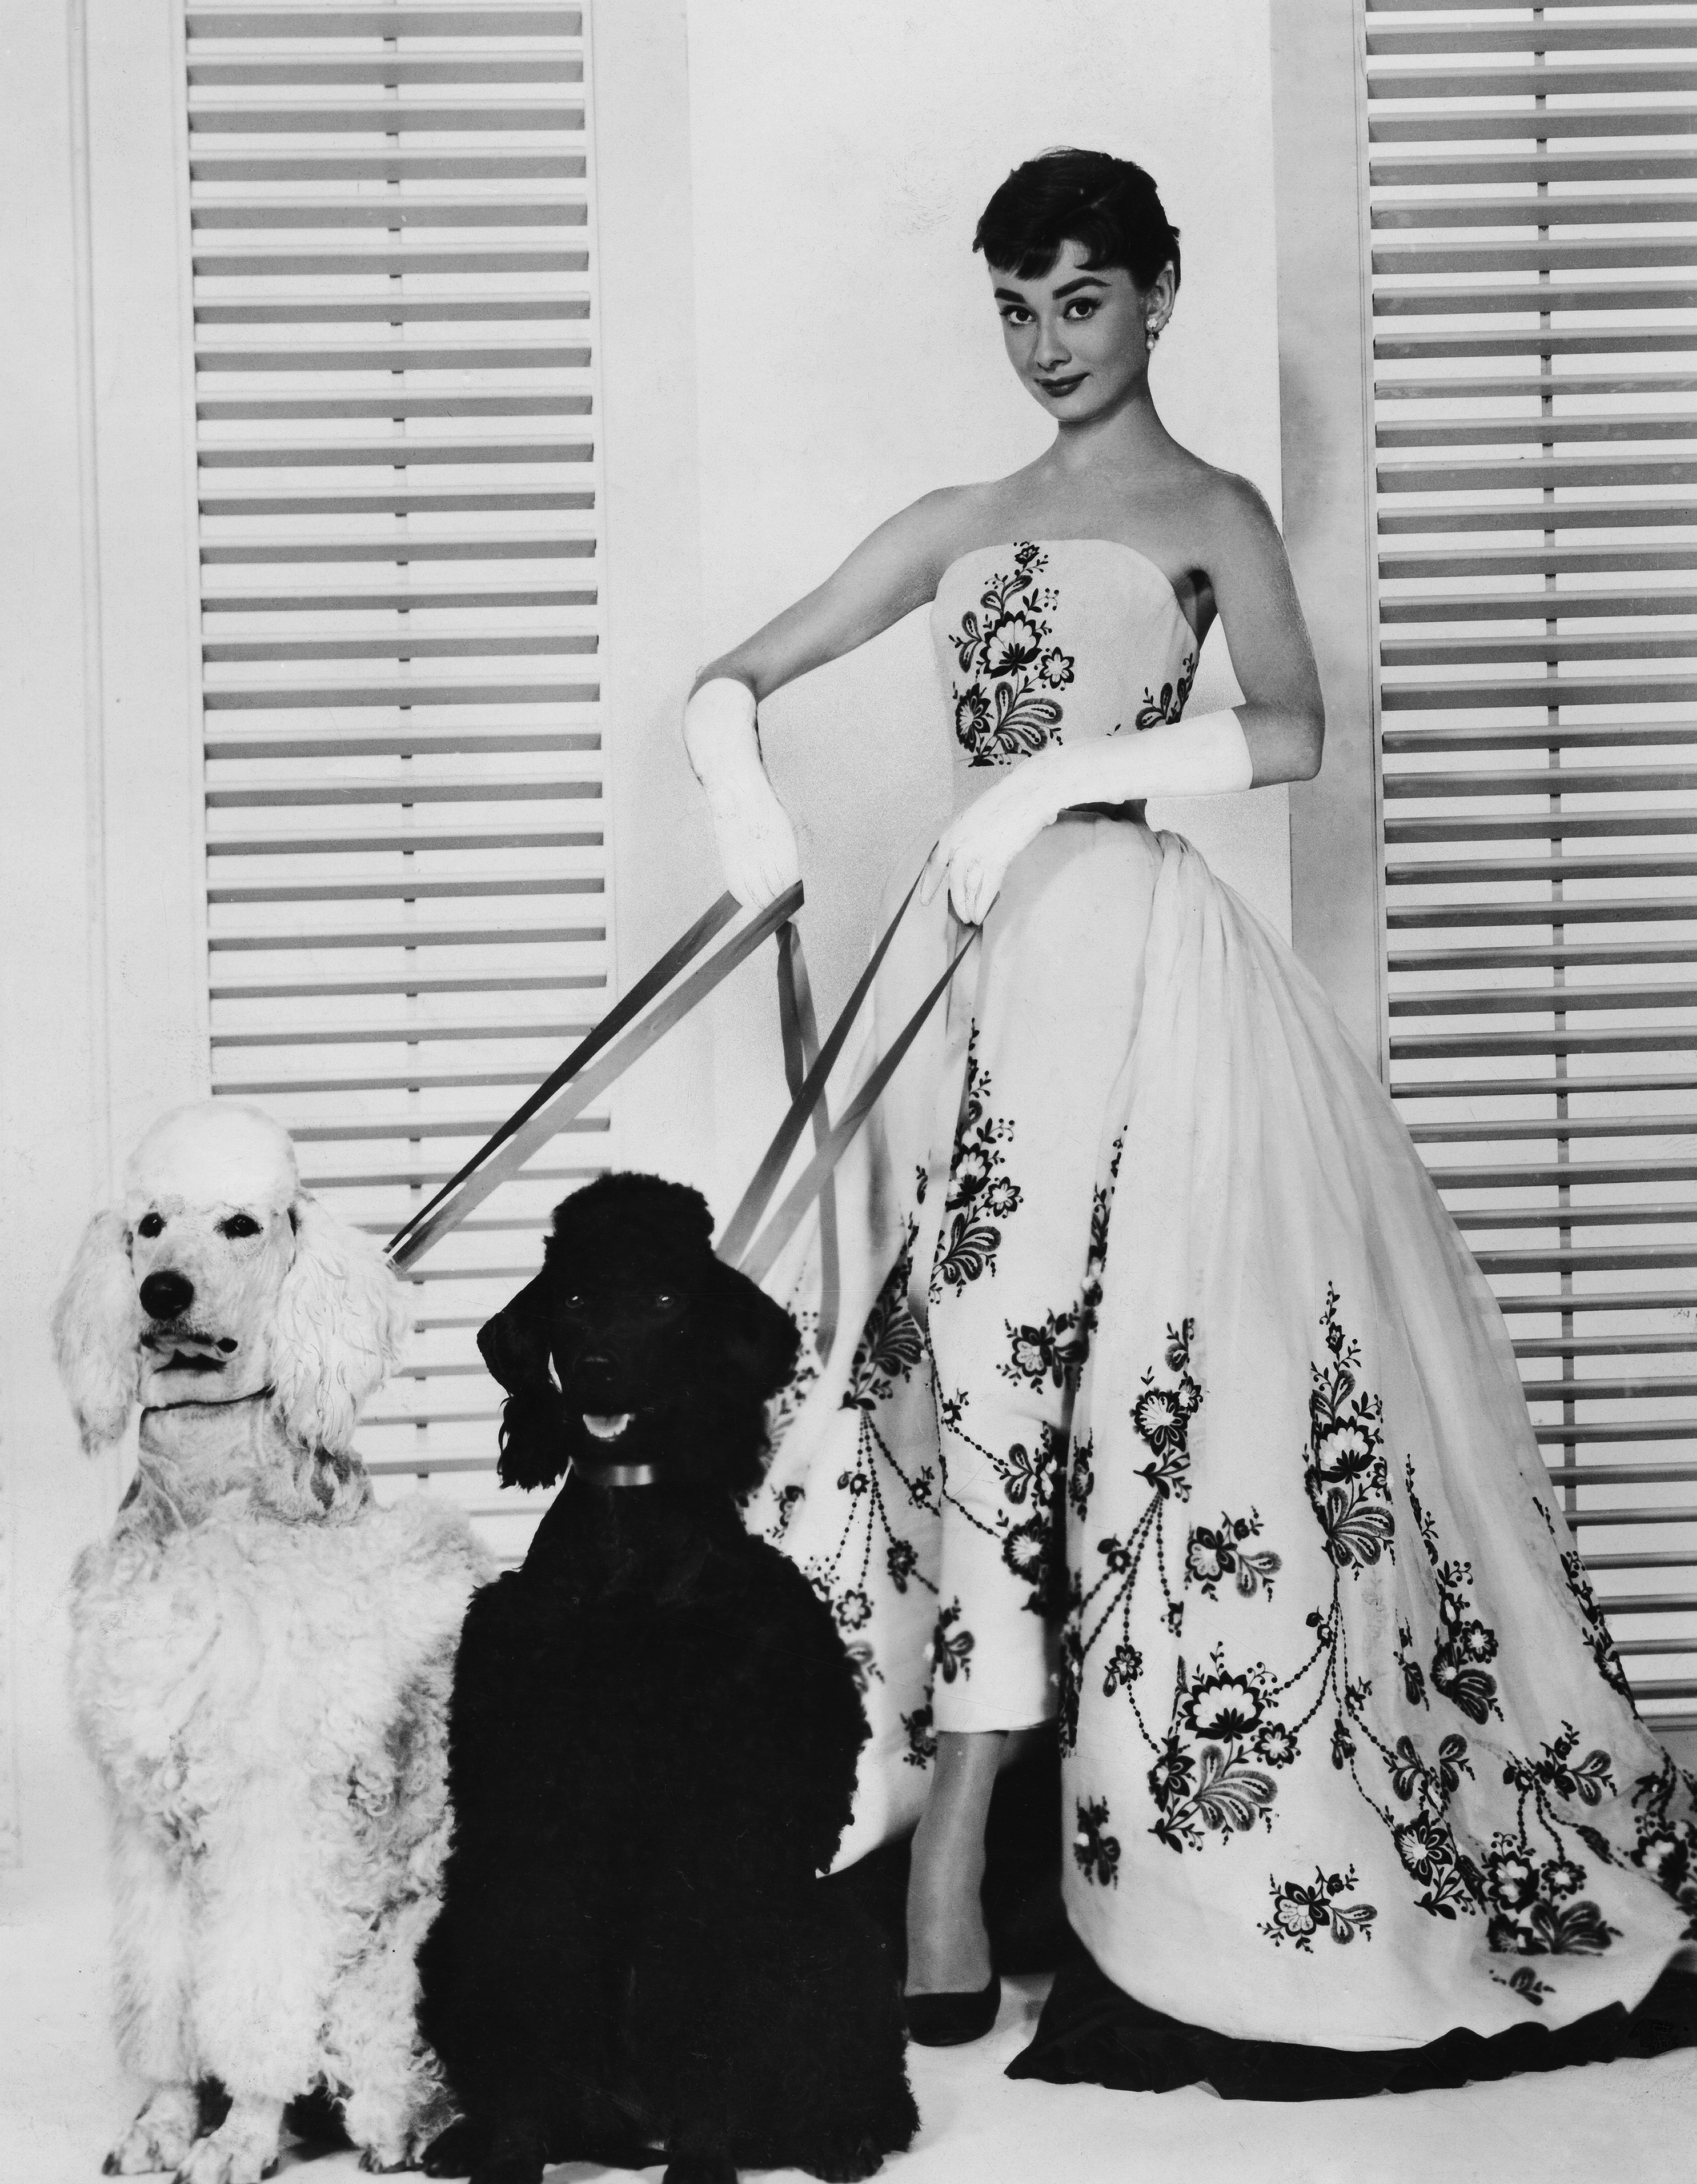 40 Years of Fashion & Friendship: Audrey Hepburn & Hubert de Givenchy